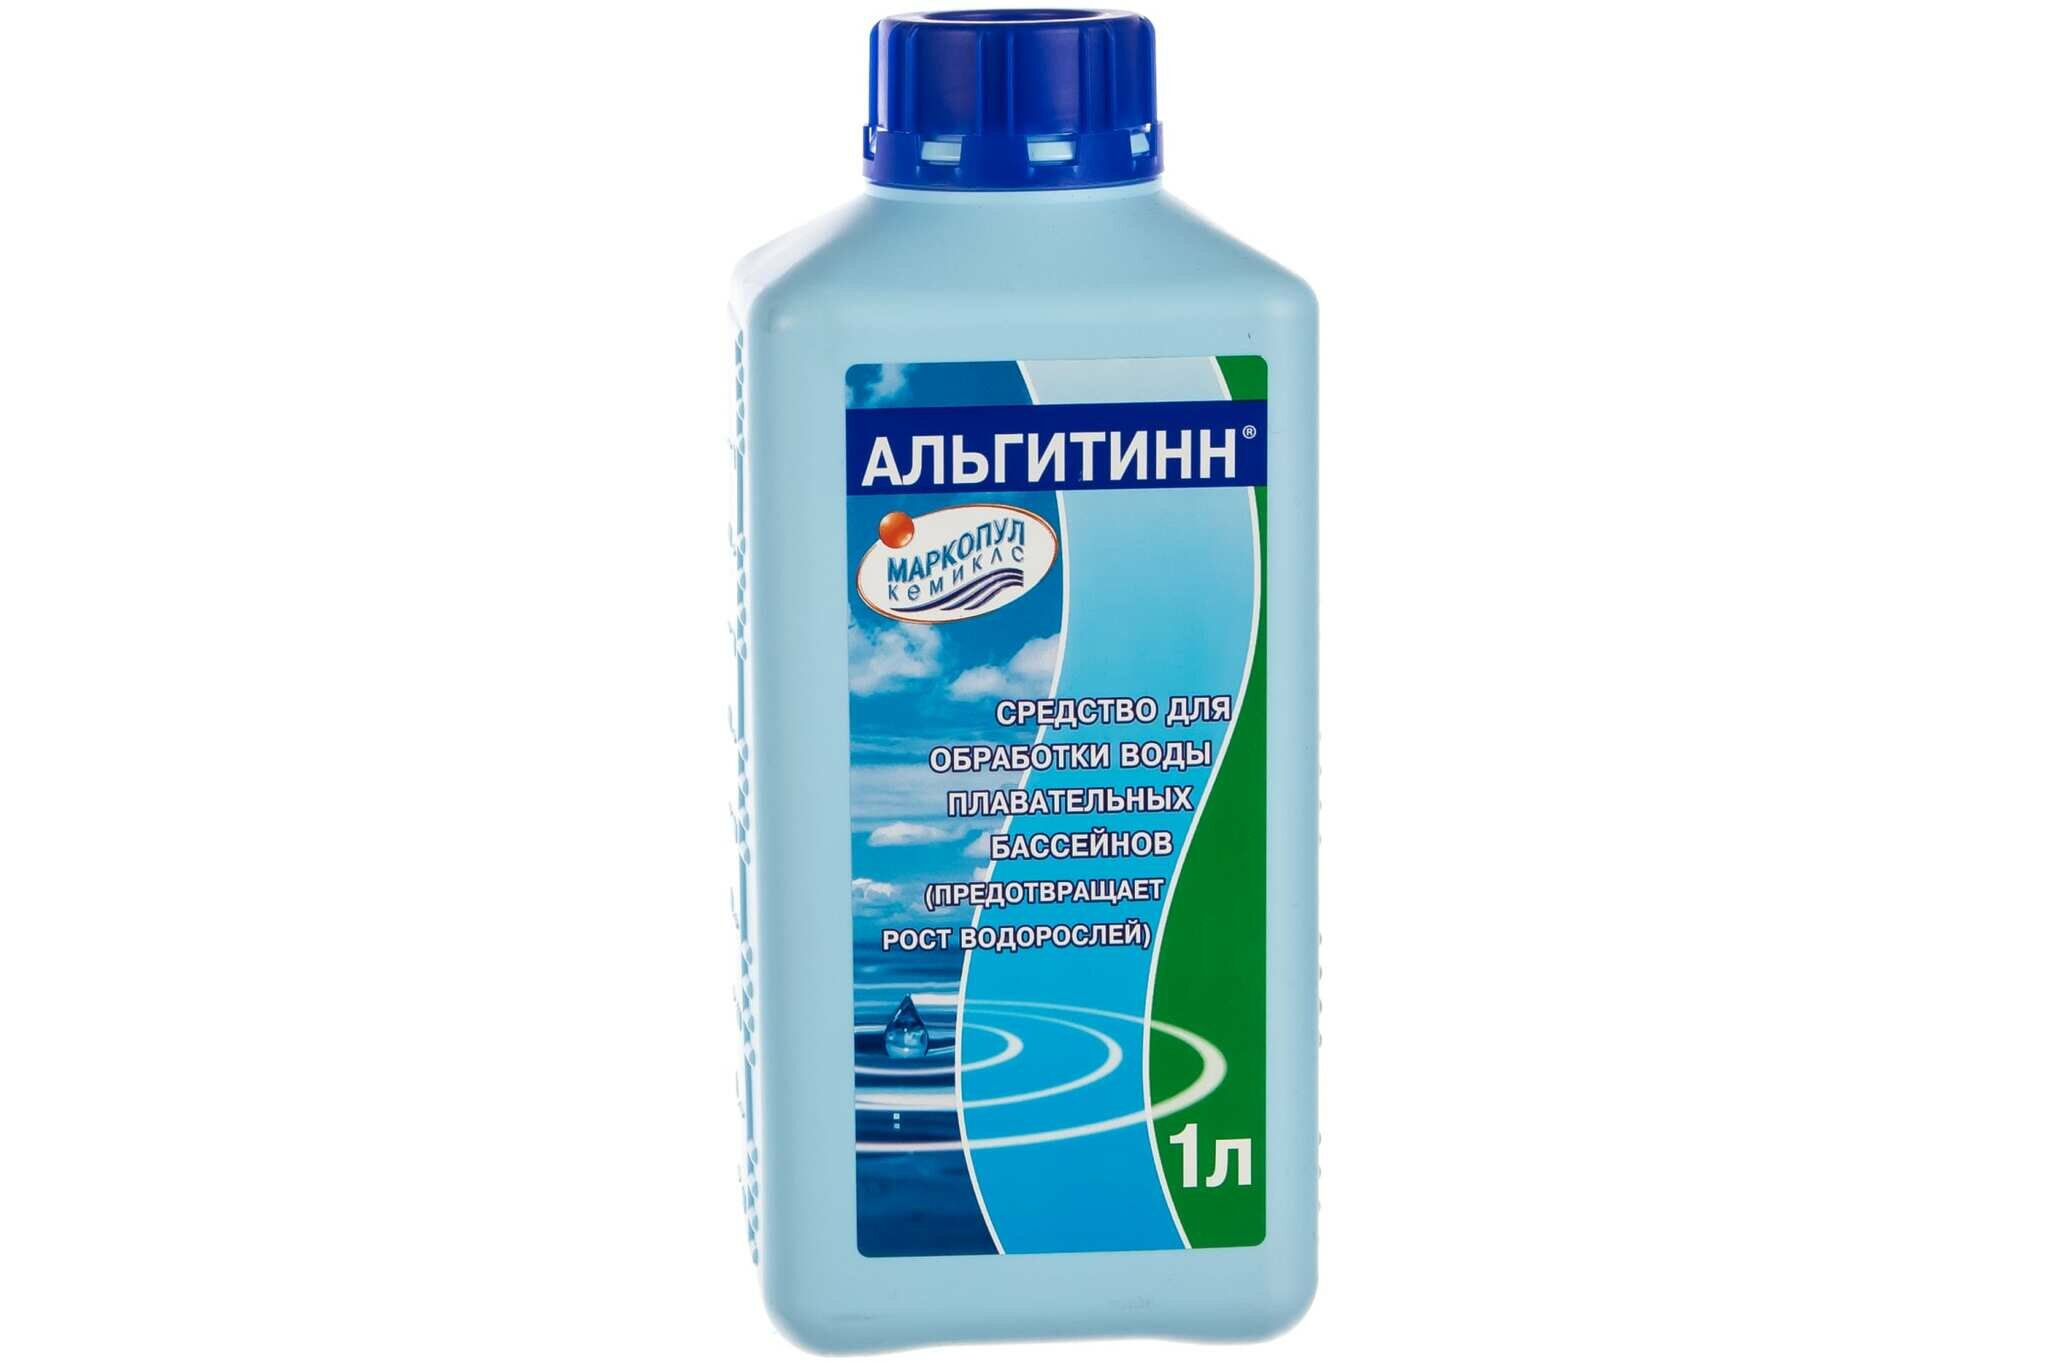 Альгитинн (1.0 л, жидкое средство) для борьбы с водорослями маркопул кемиклс